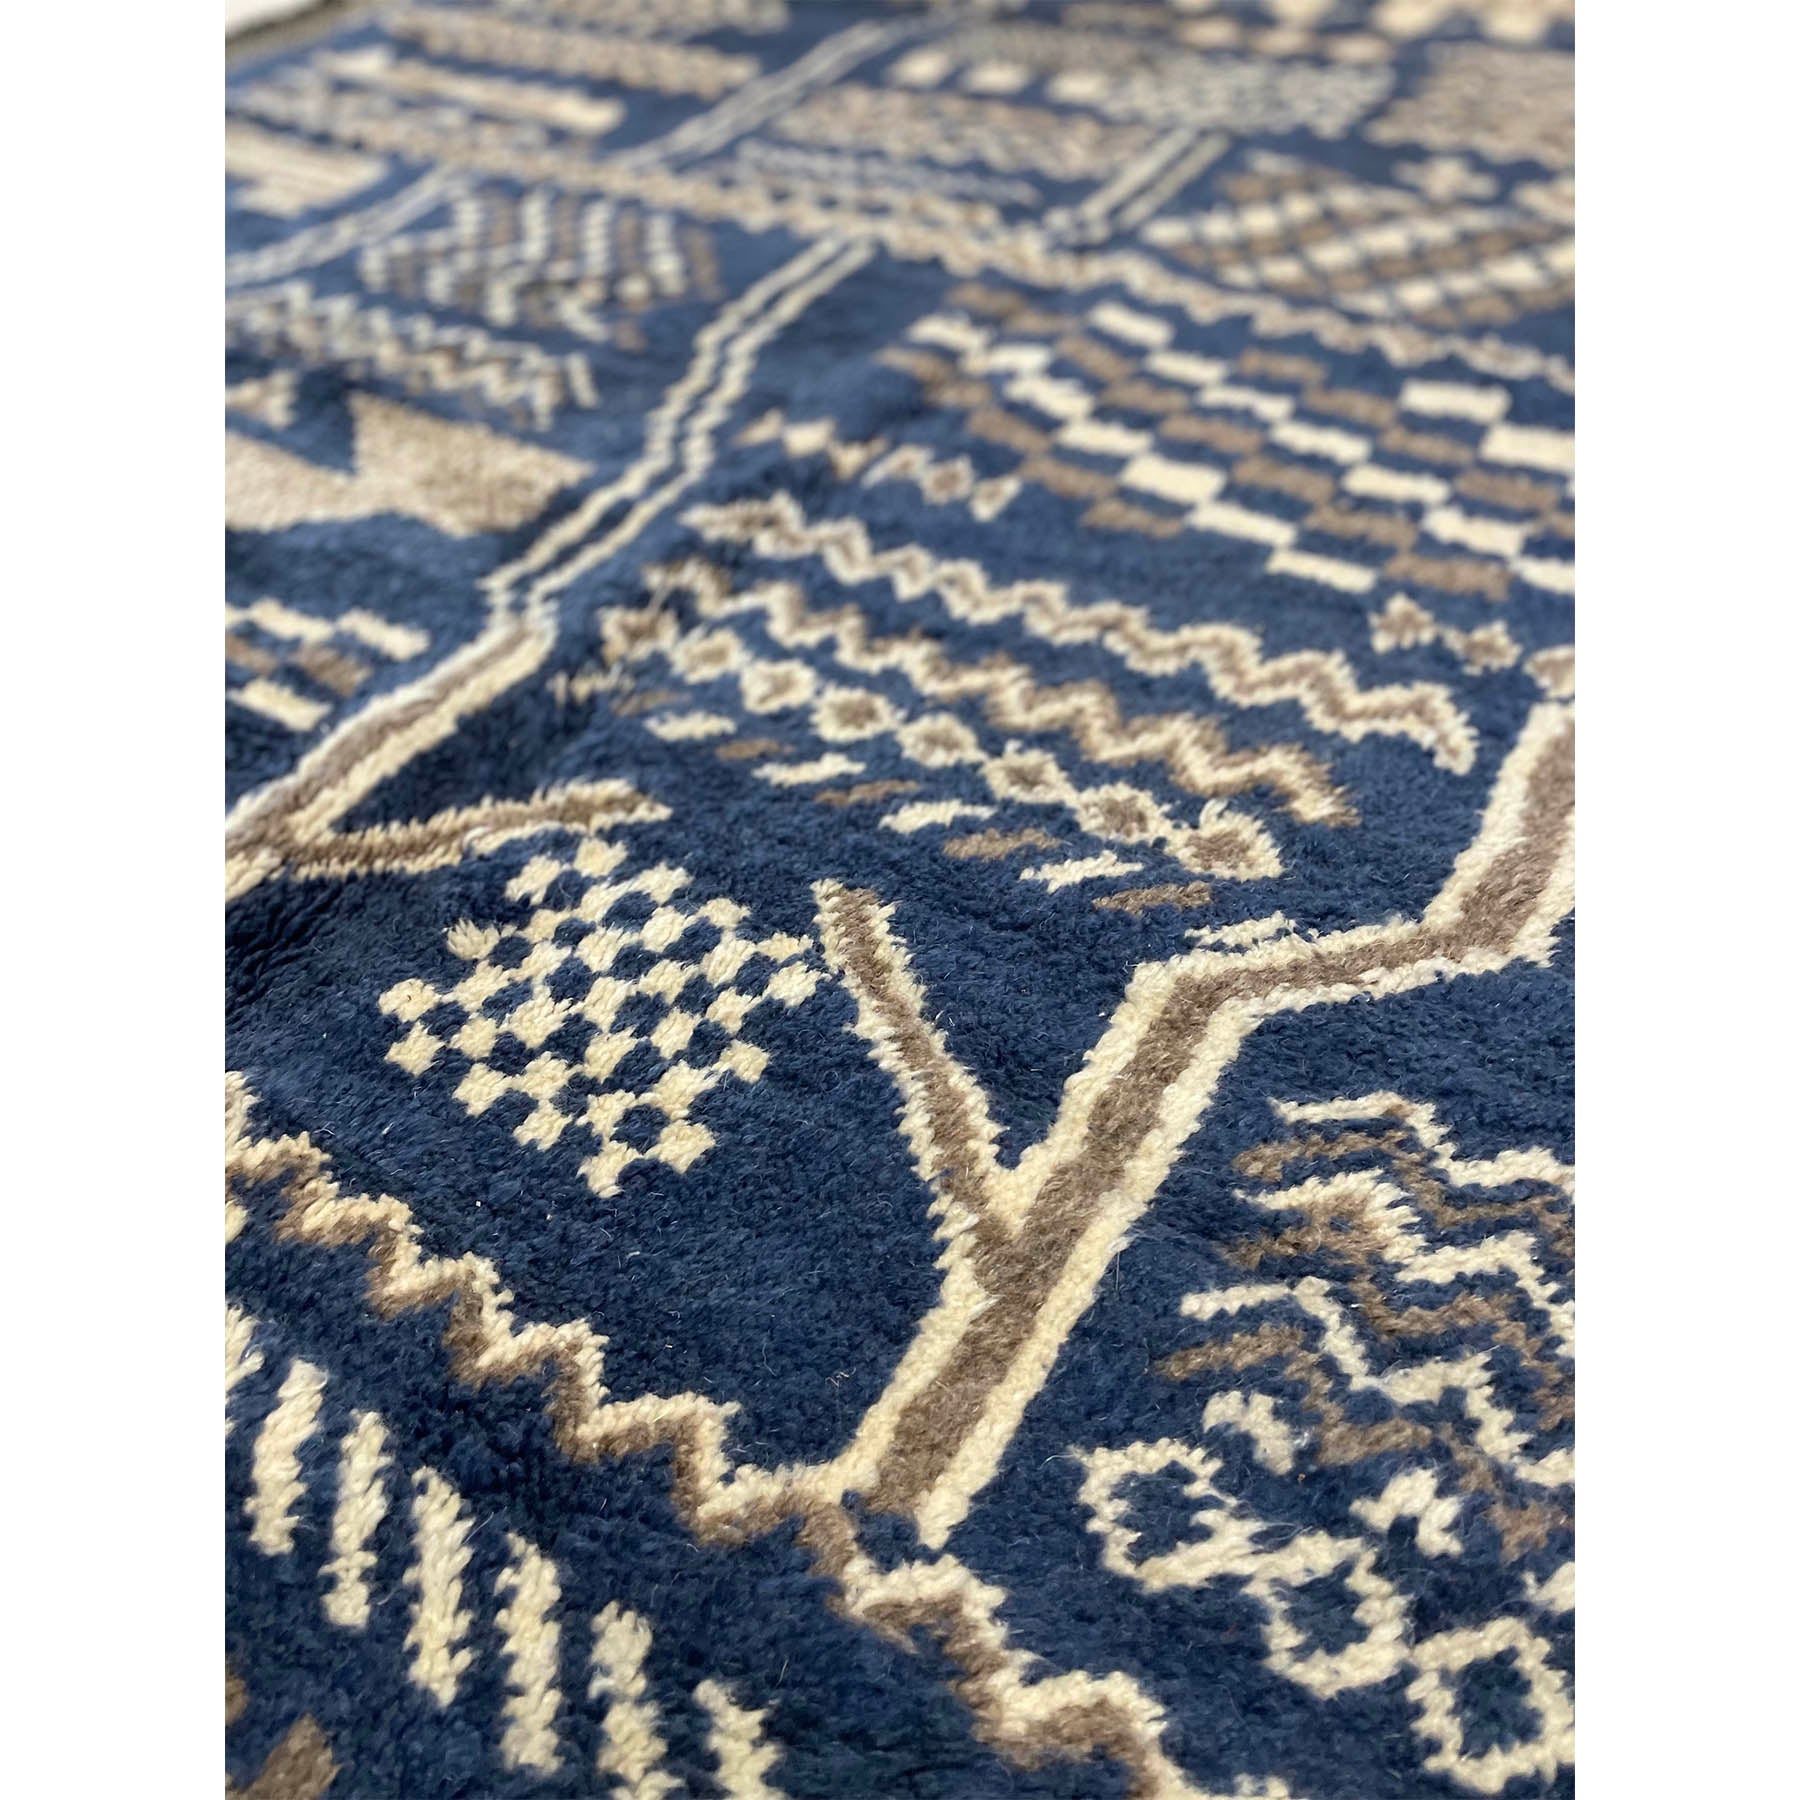 Grey and blue Moroccan rug with abstract design - Kantara | Moroccan Rugs